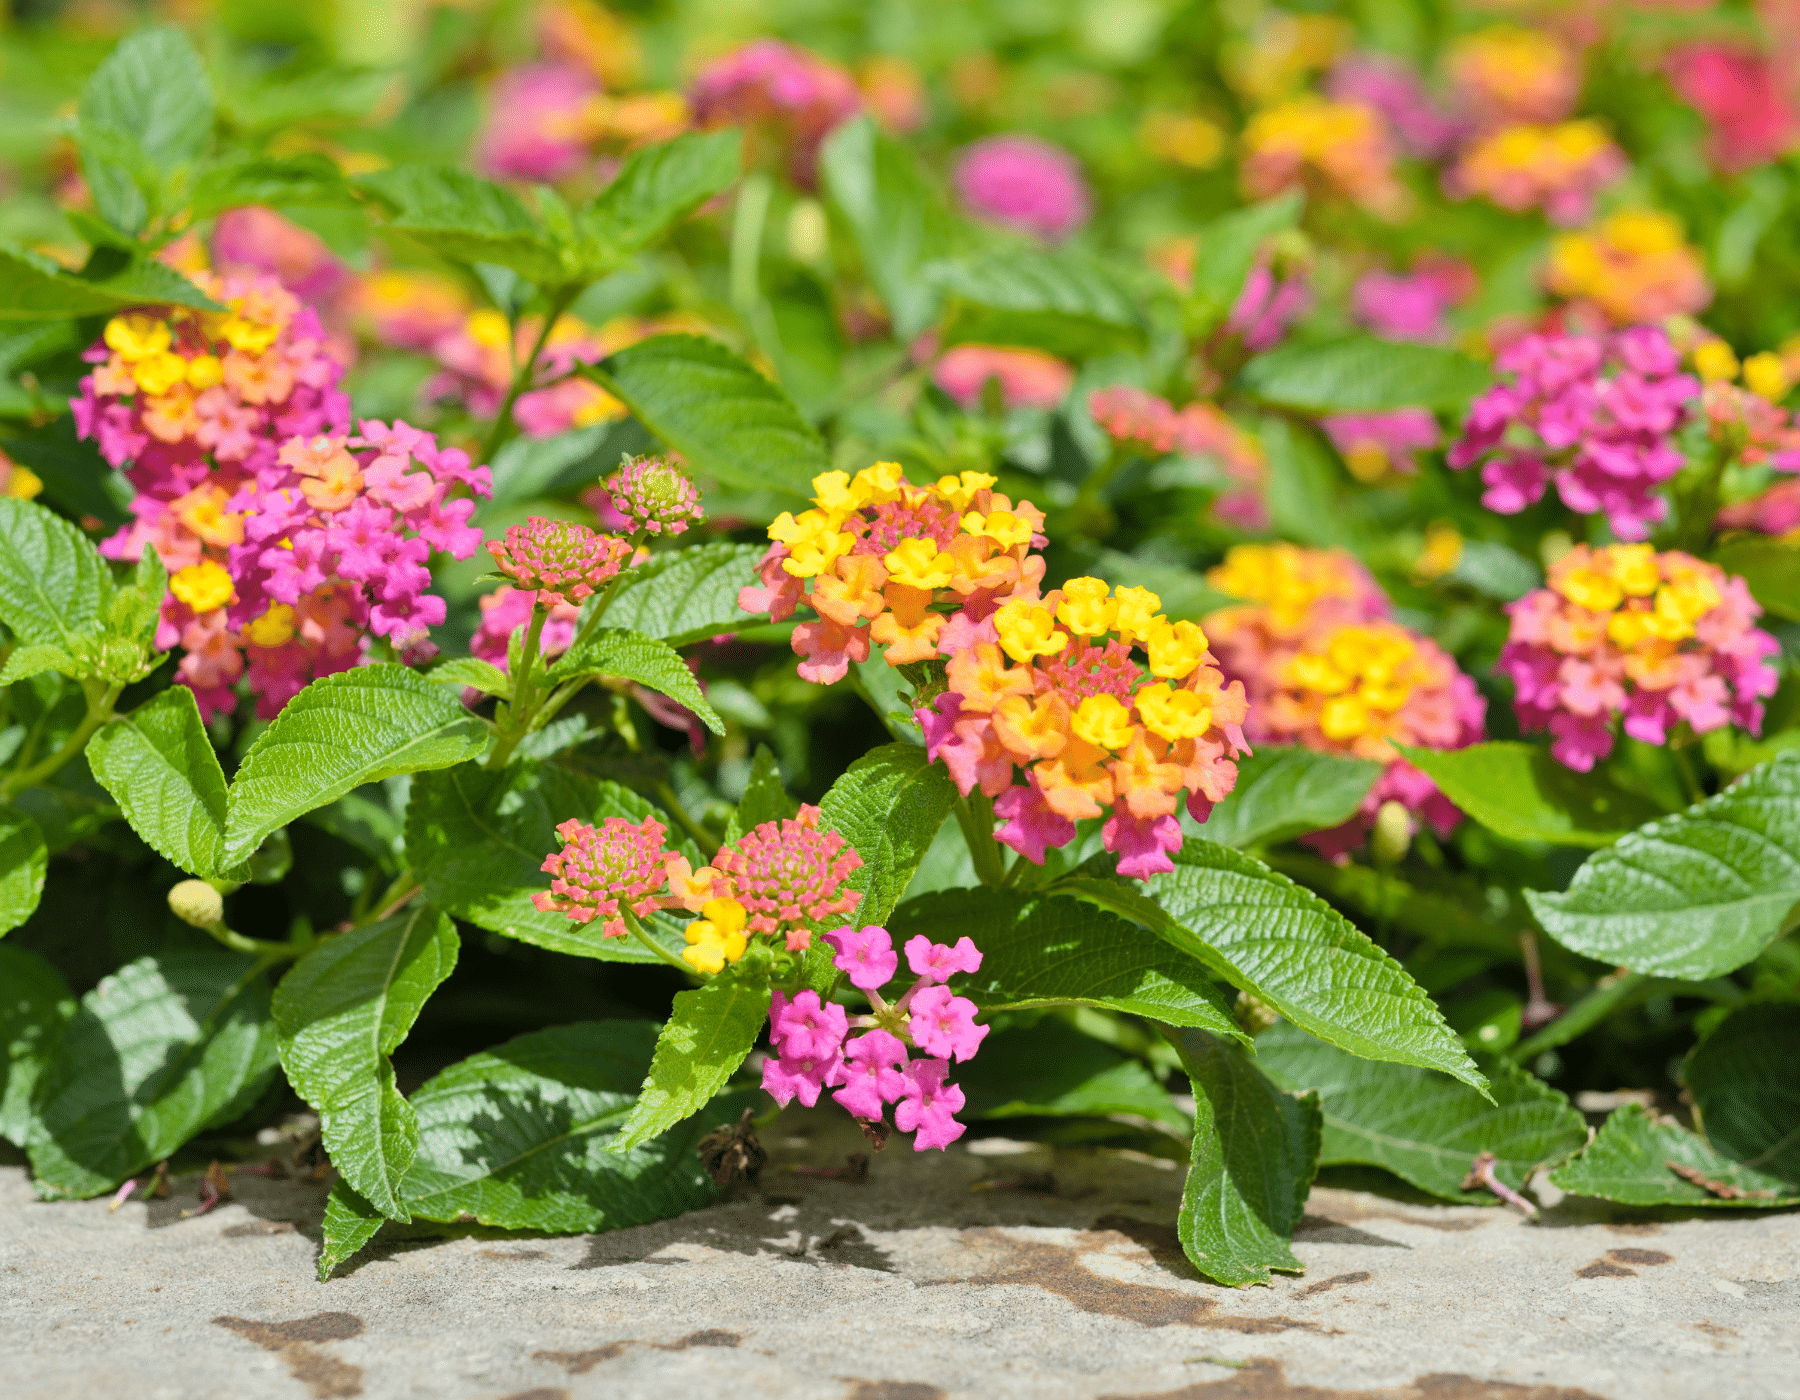 Lantana Plant With Flowers